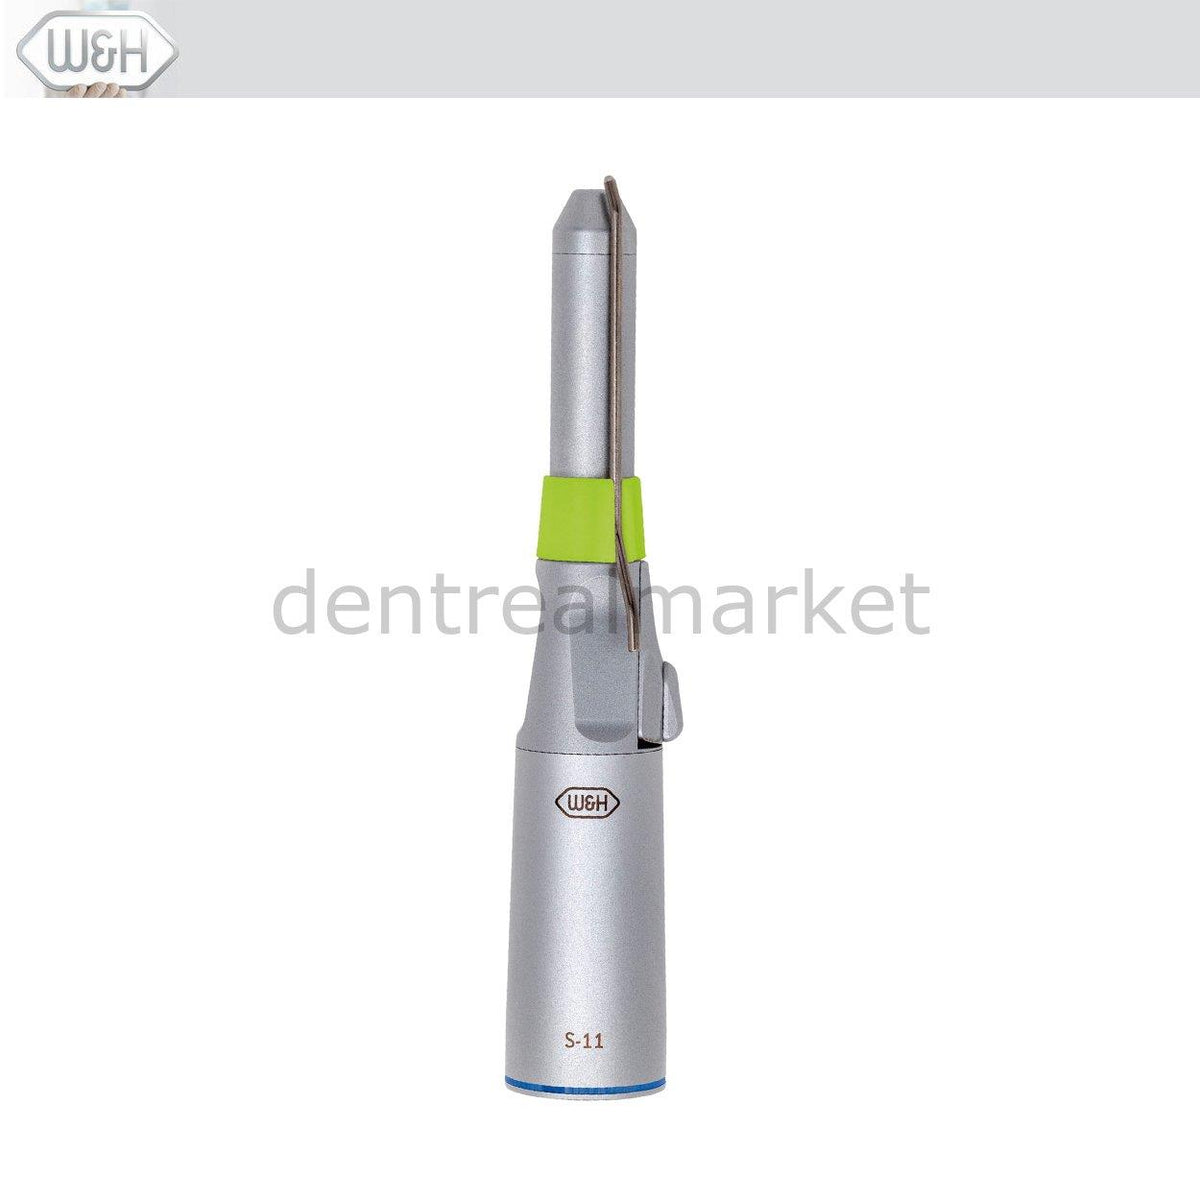 DentrealStore - W&H Dental S11 Dental Surgical Straight Handpiece 1:1